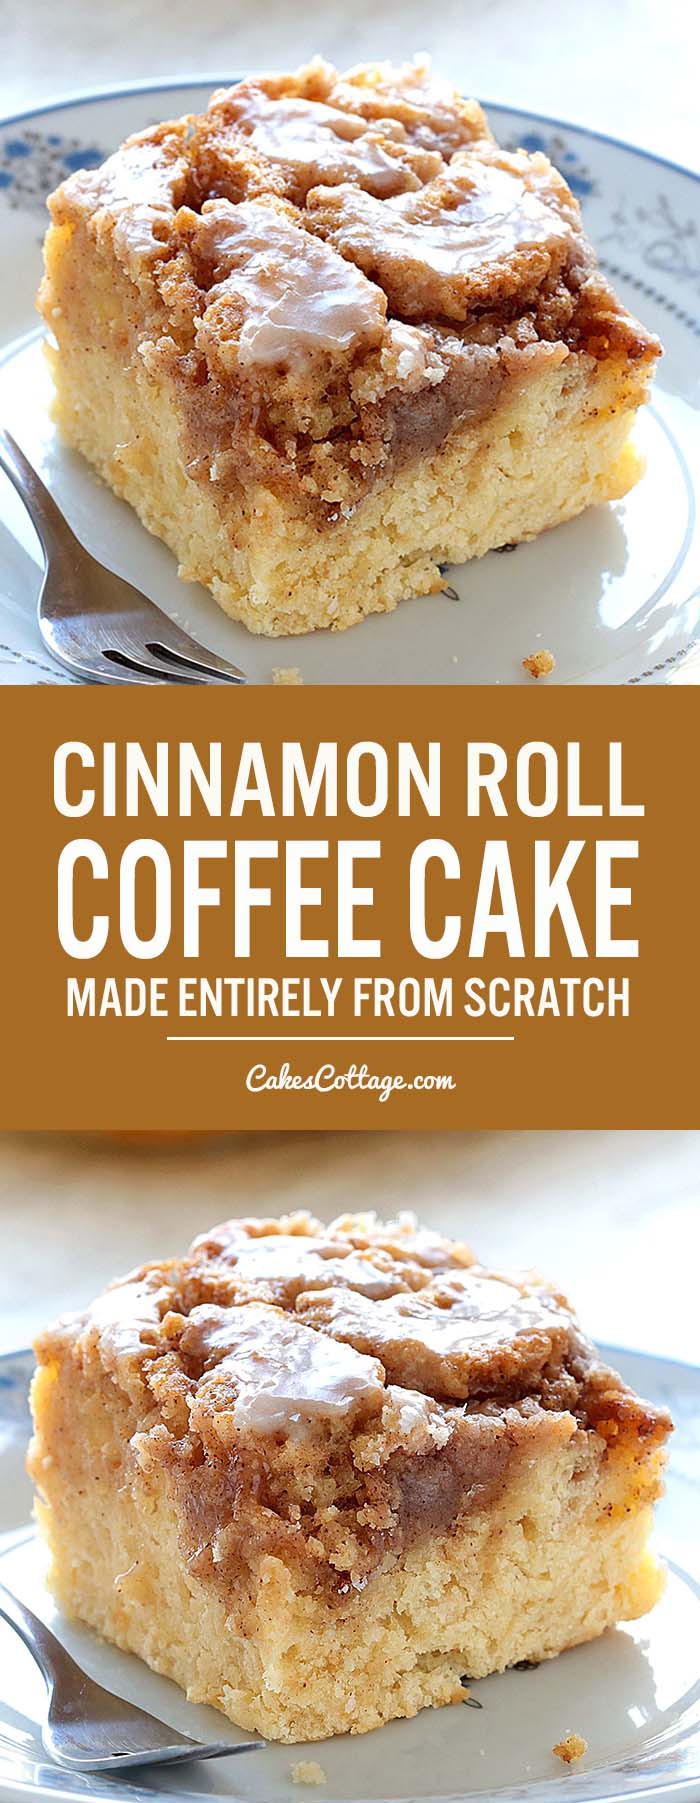 Cinnamon Coffee Cake
 Easy Cinnamon Roll Coffee Cake Cakescottage